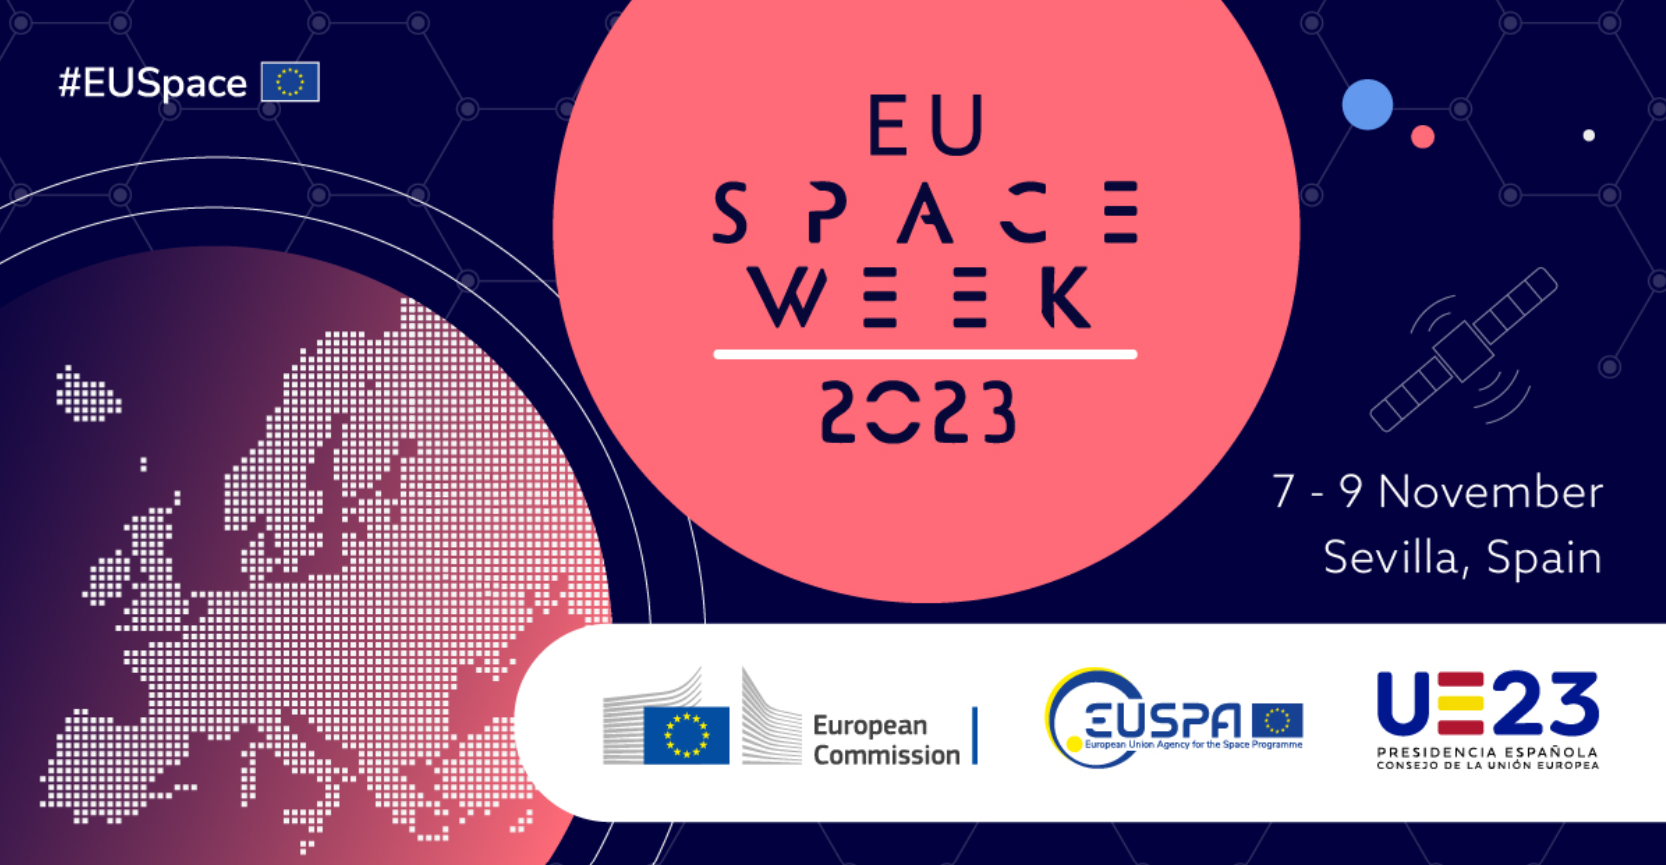 Register for EU Space Week 2023